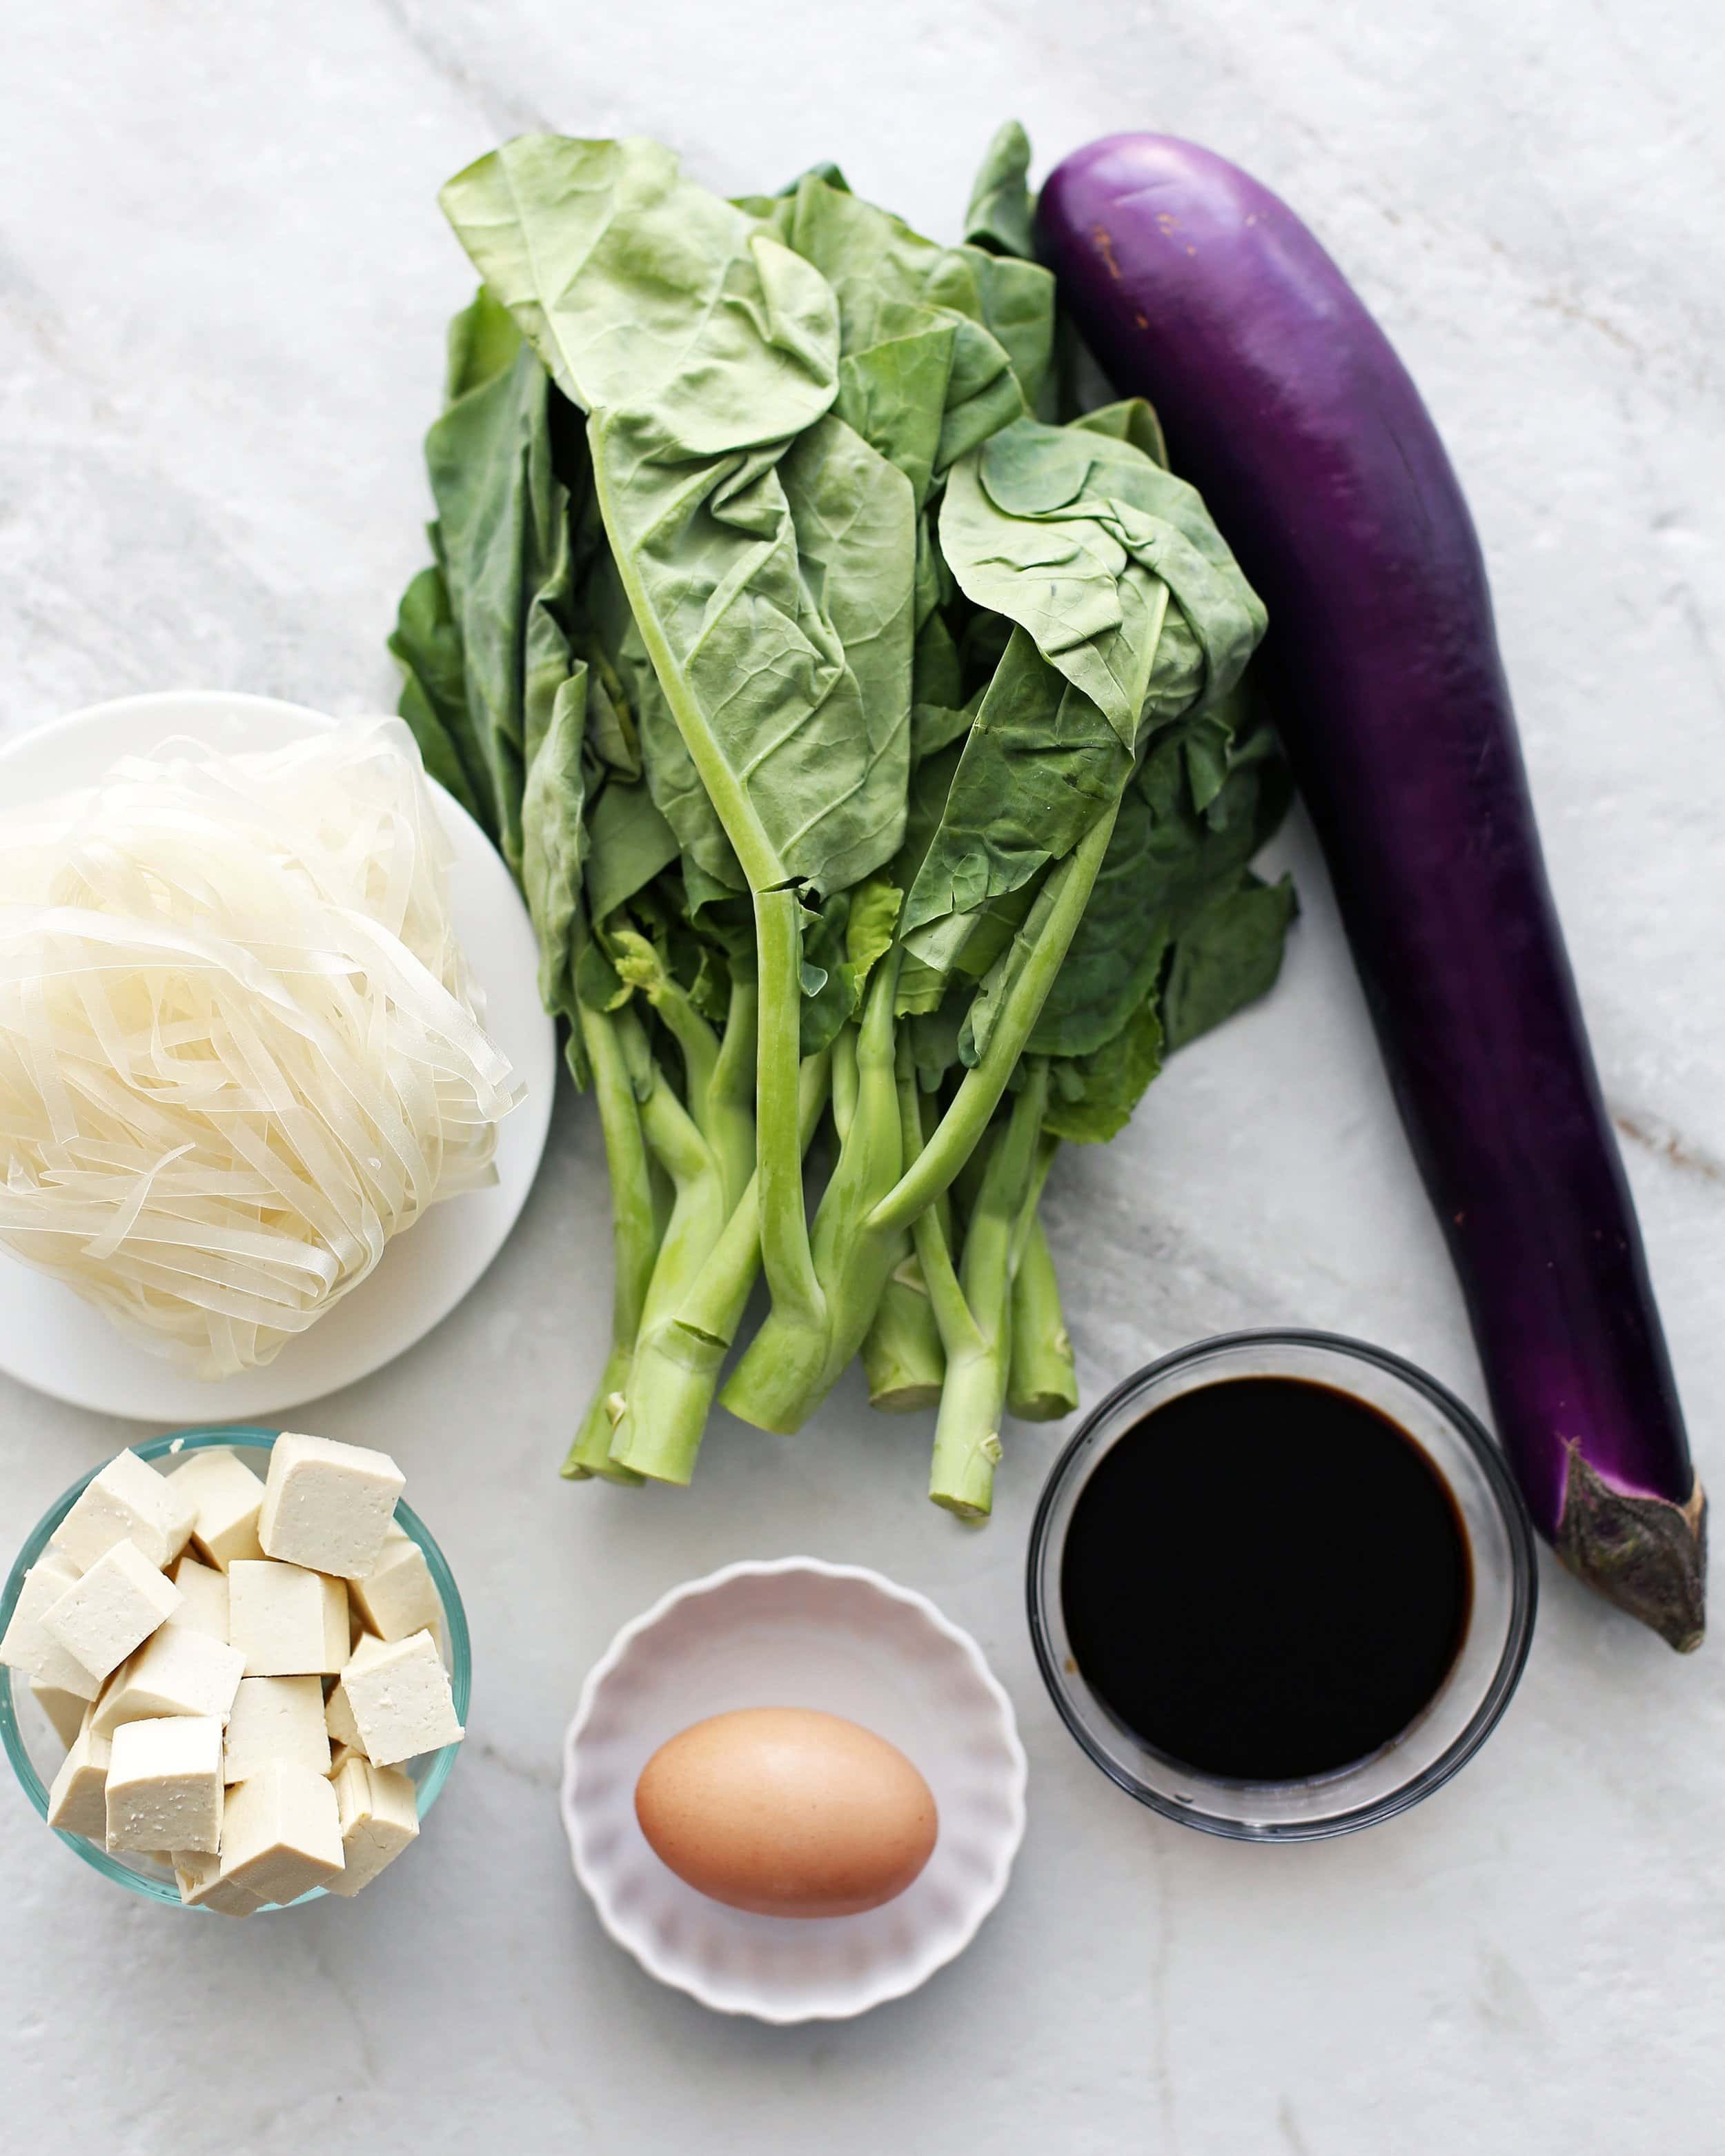 eggplant, tofu, gai lan, and garlic on the cutting board, ready for the wok